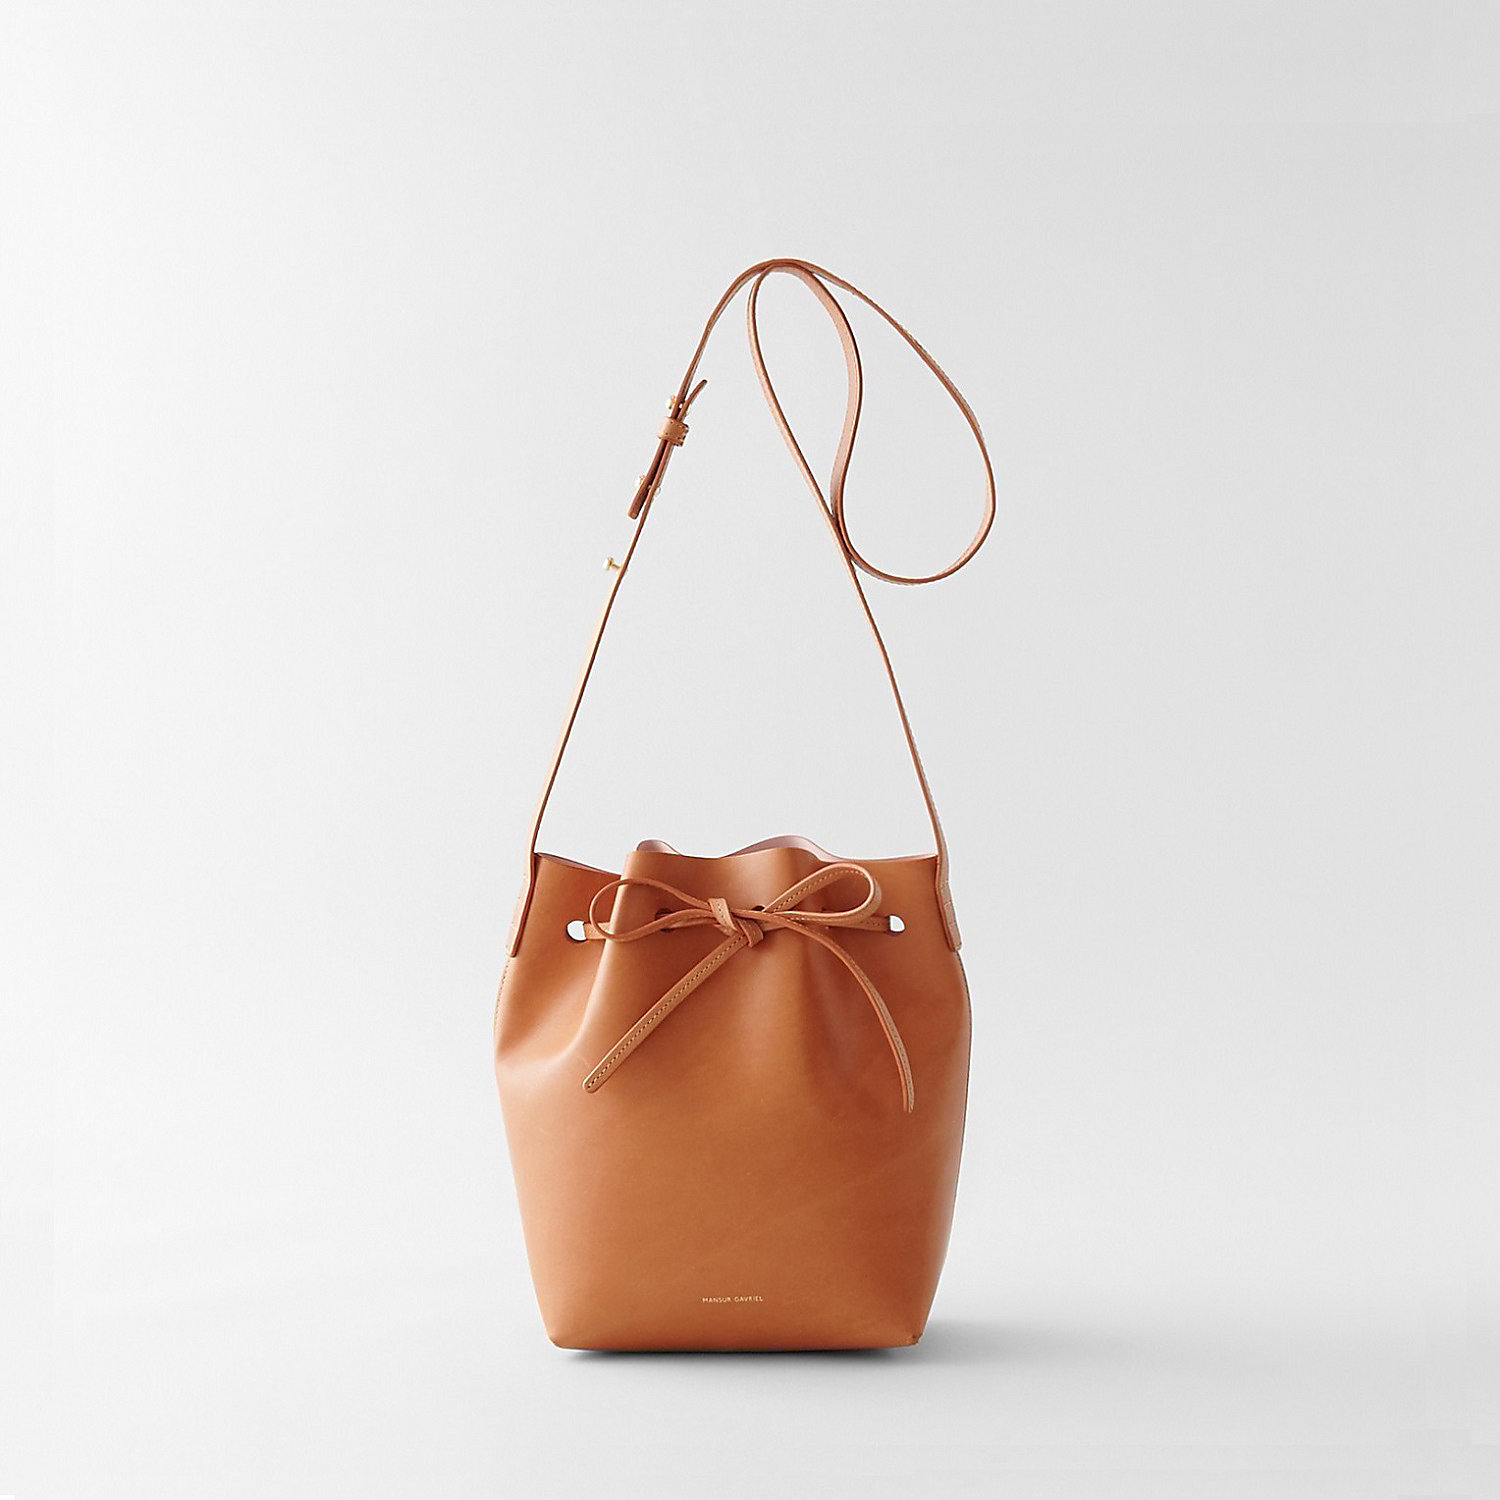 Mansur gavriel Mini Bucket Bag in Orange (CAMMELLO ROSA) | Lyst